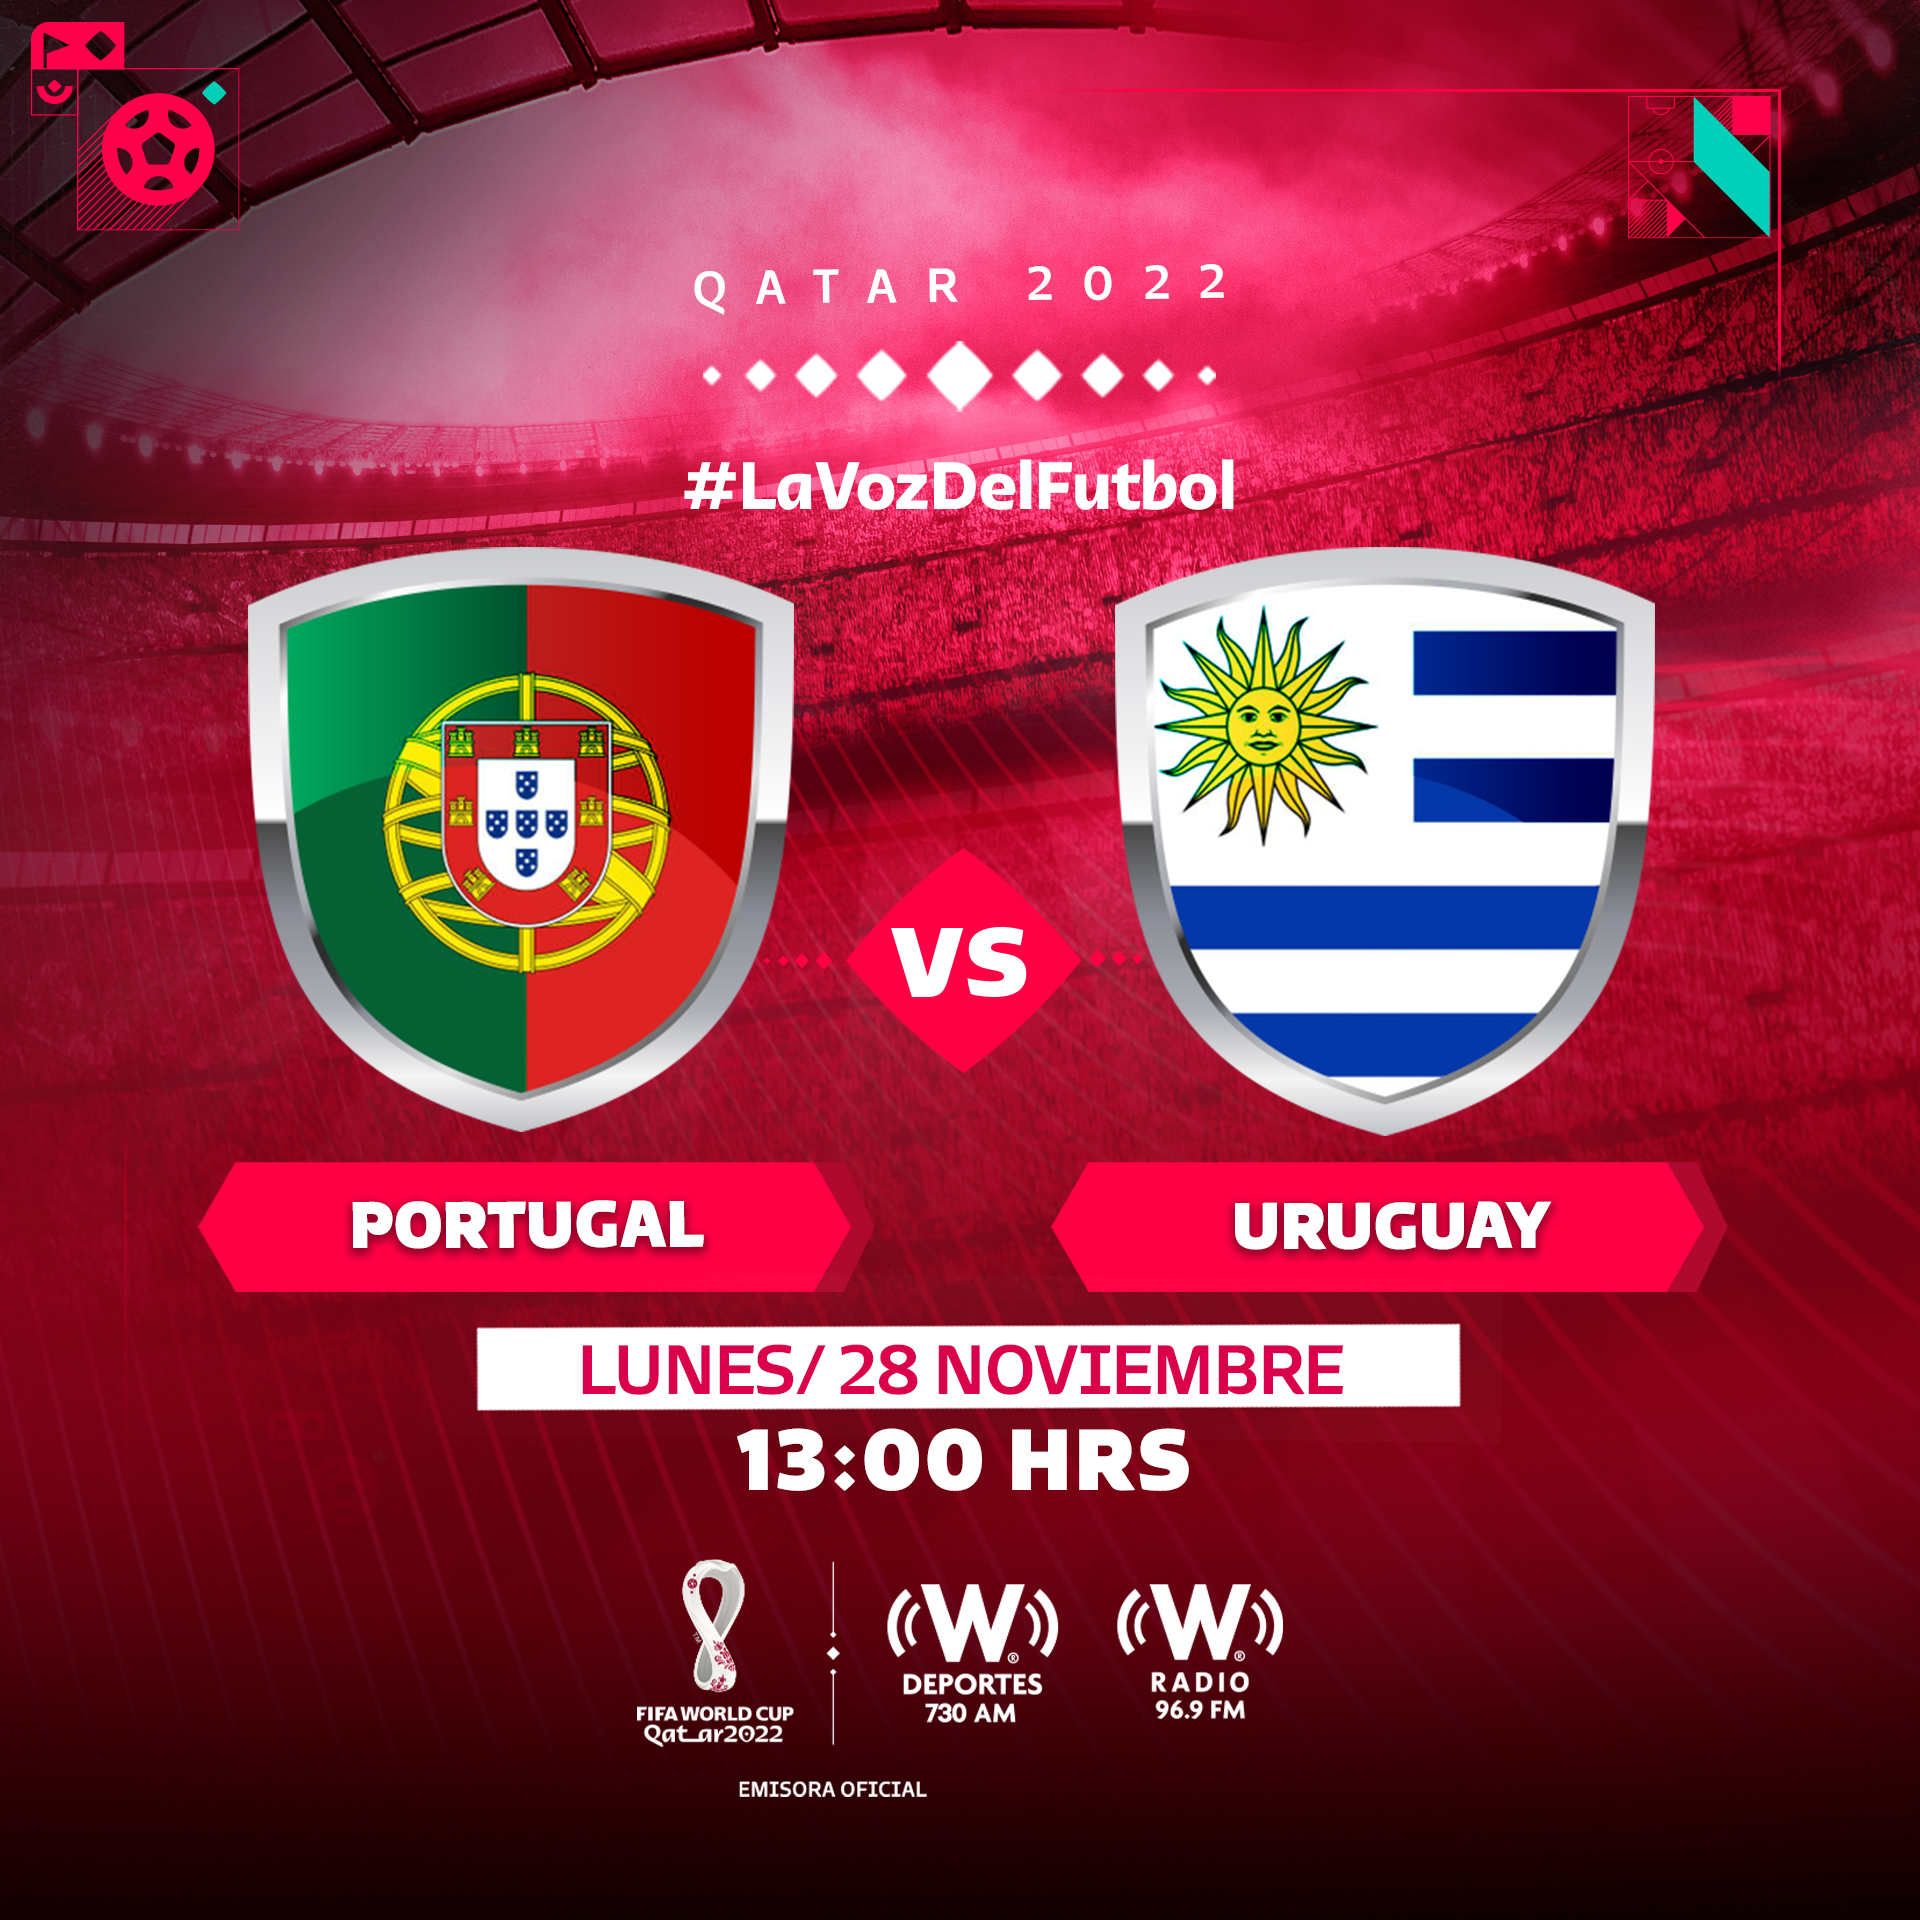 Ver gratis Portugal vs Uruguay EN VIVO